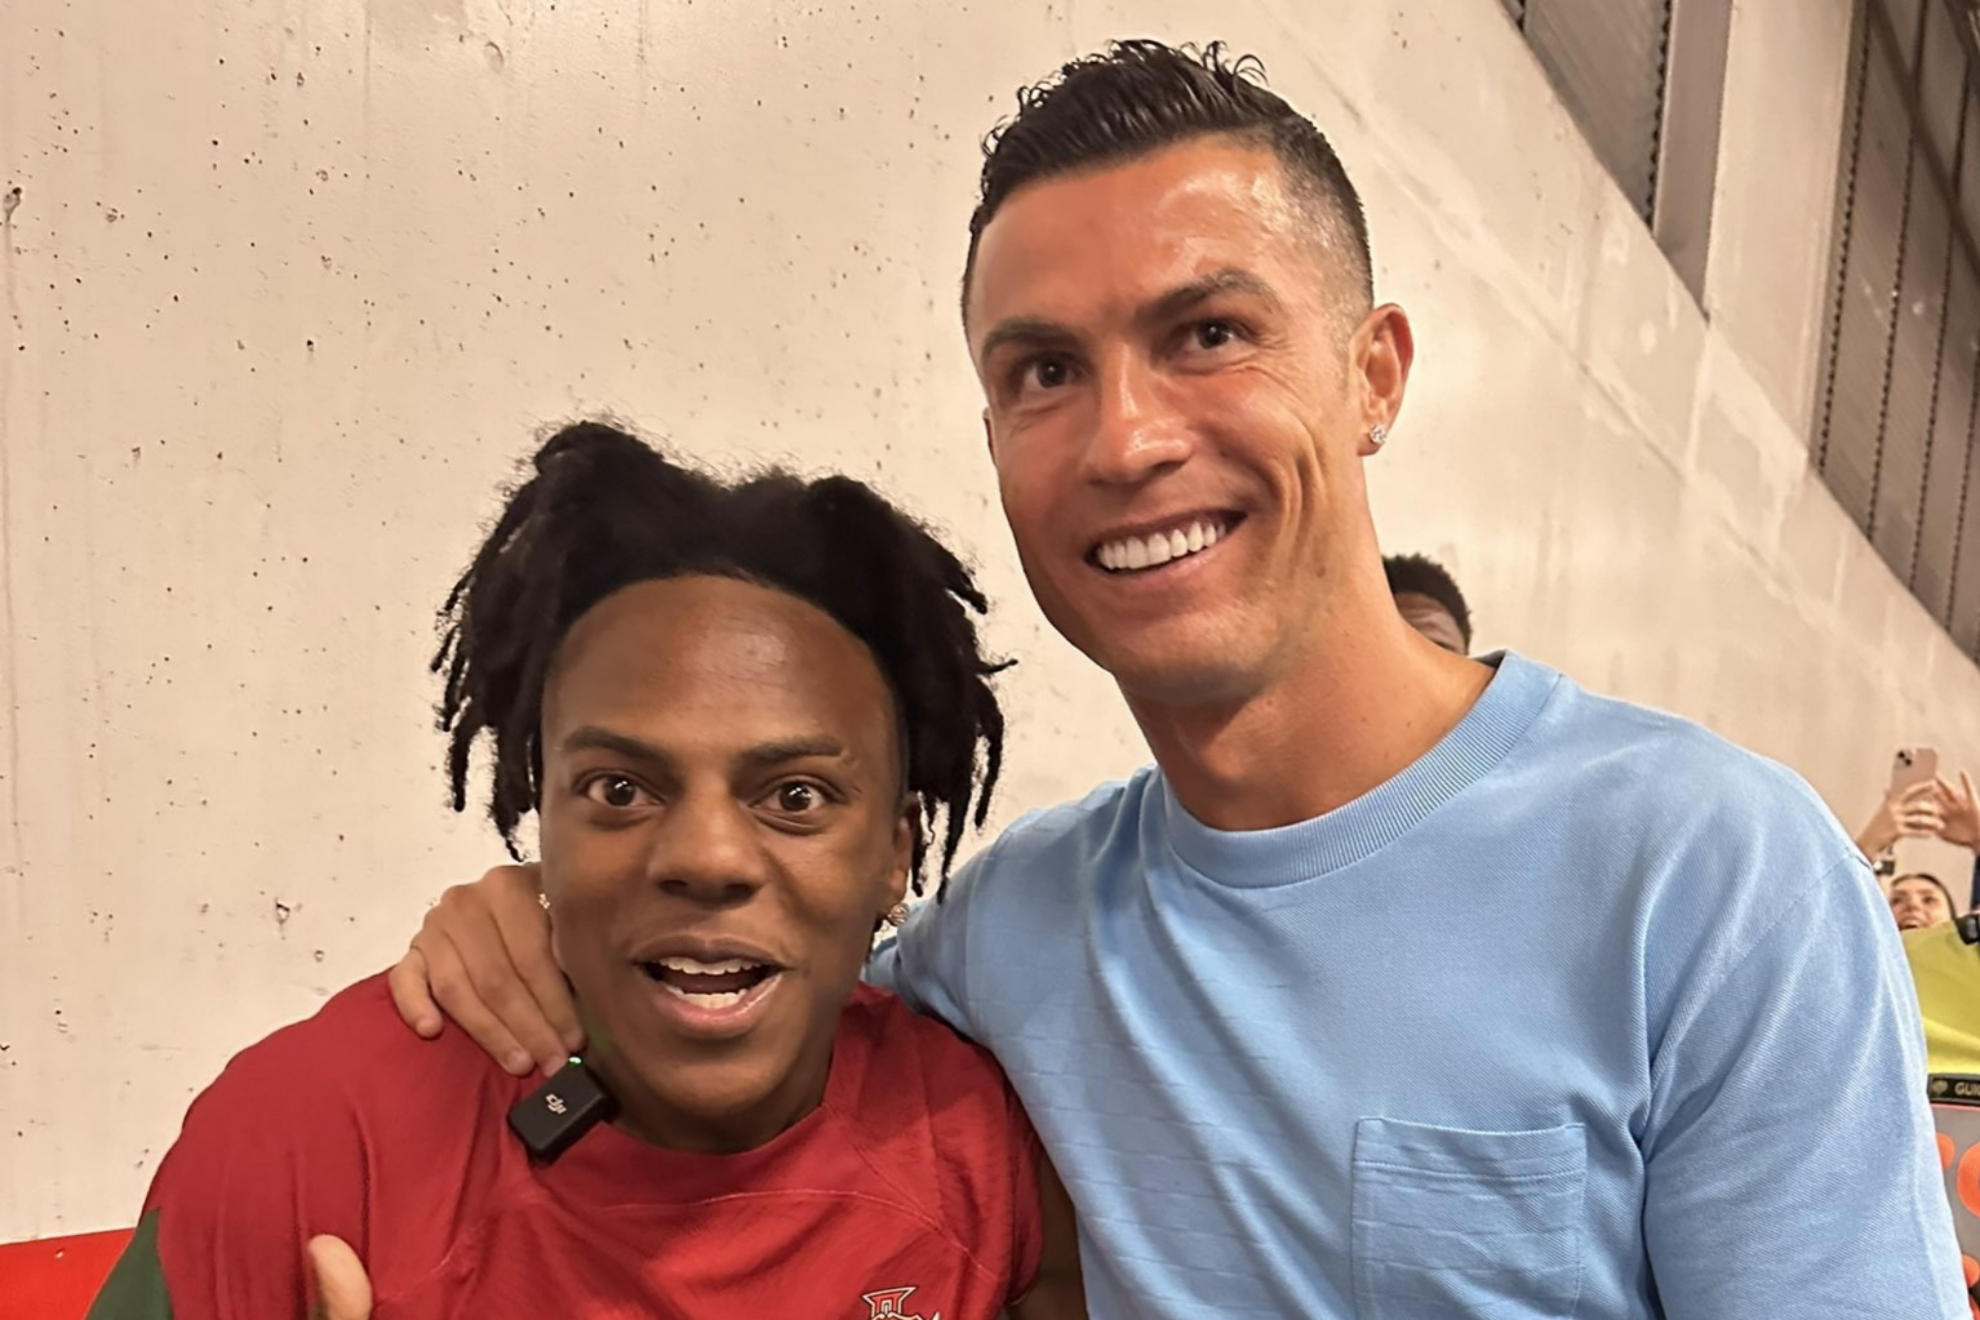 IShowSpeed's tears as he finally meets his idol Cristiano Ronaldo